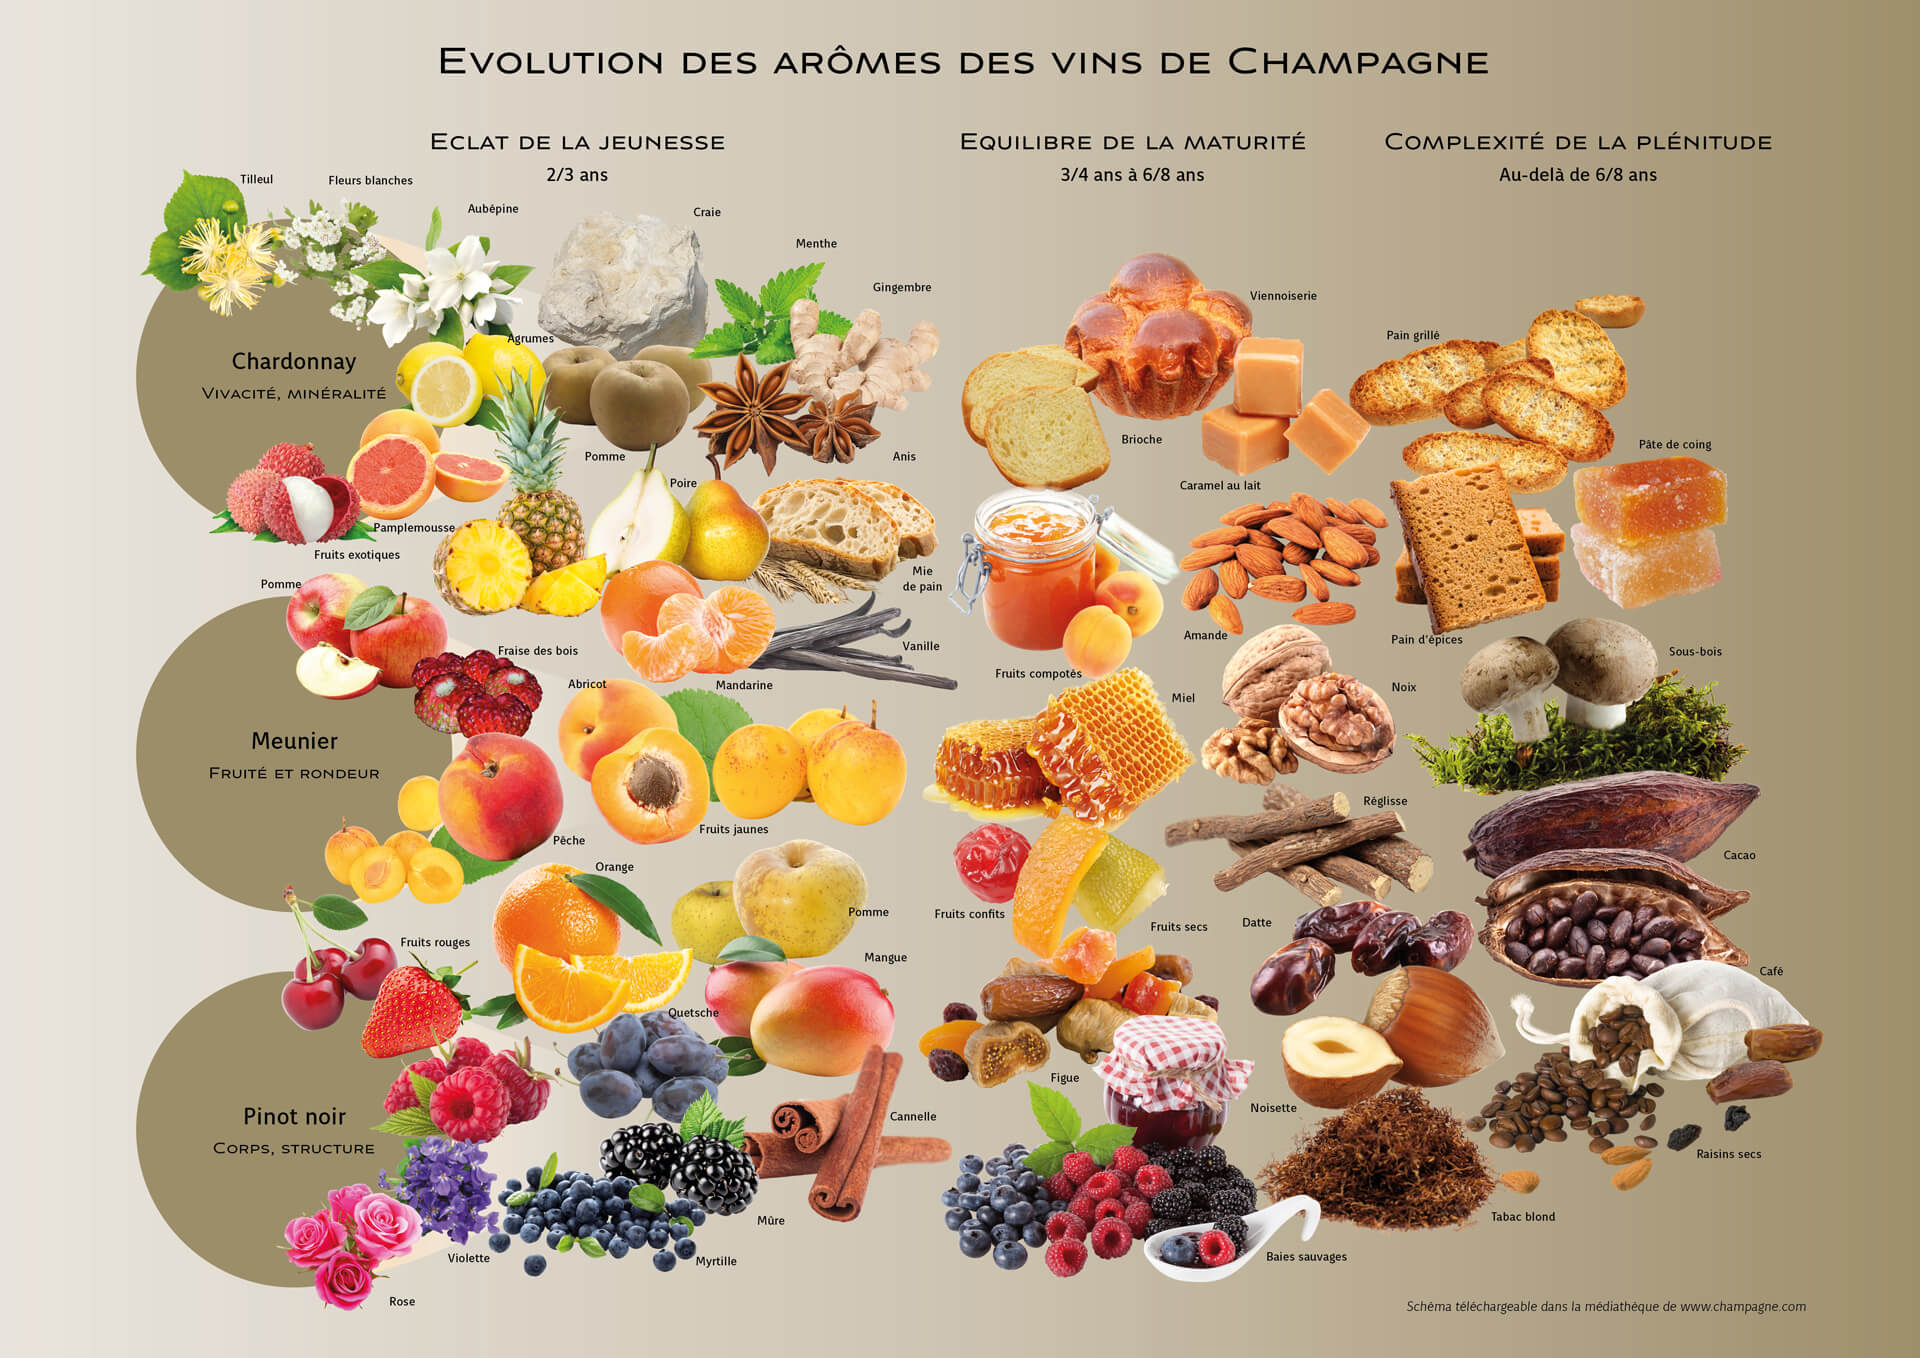 Evolution des armes des vins de Champagne